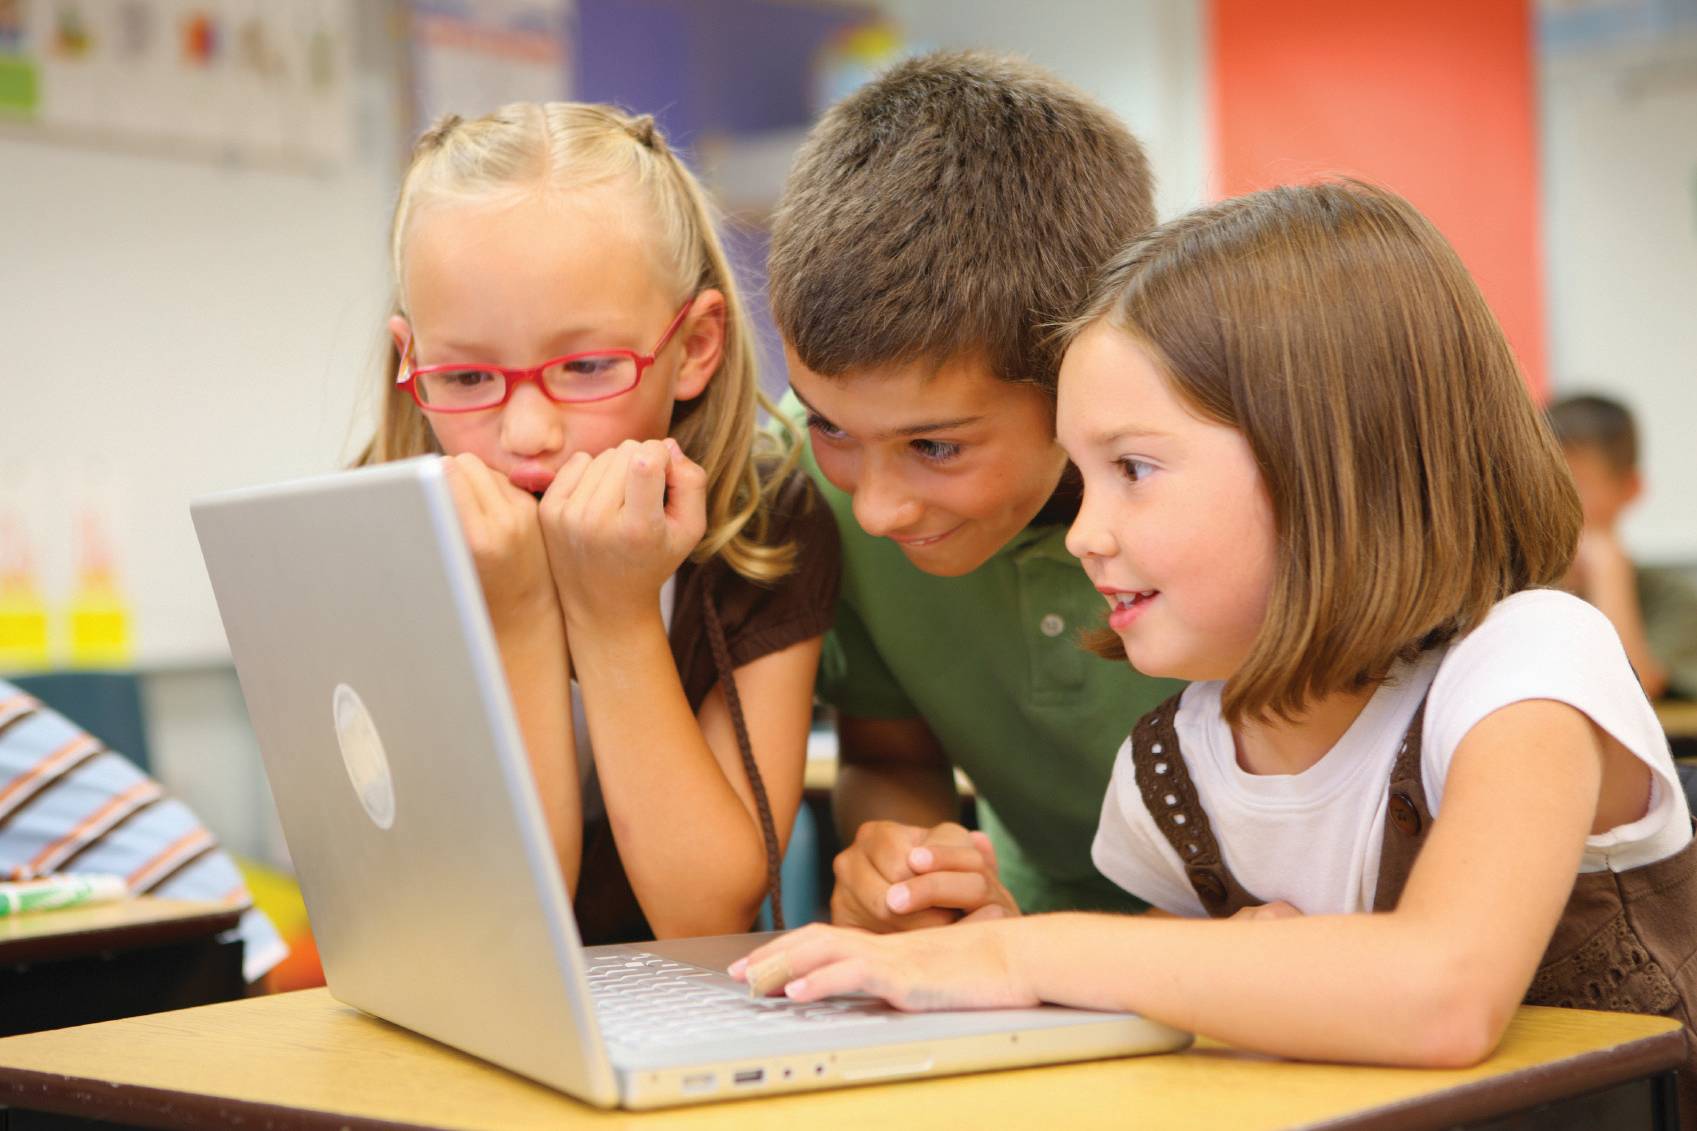 children-using-laptop-shared-under-cc-by-sa-by-lucelia-ribeiro--dyn--fullviewsize.jpg